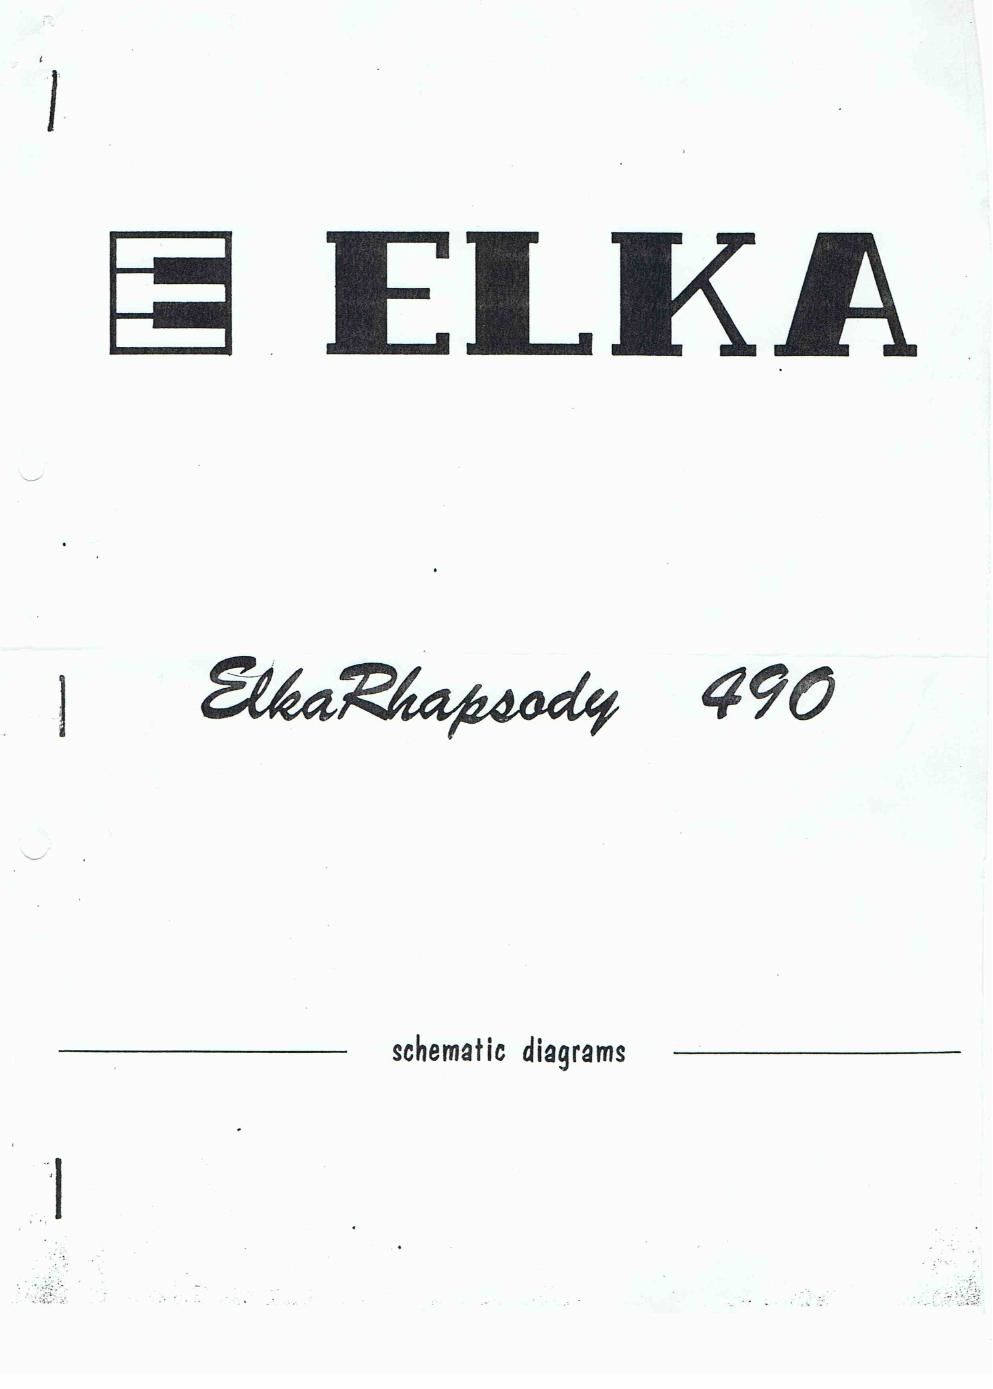 elka elkarhapsody 490 service manual